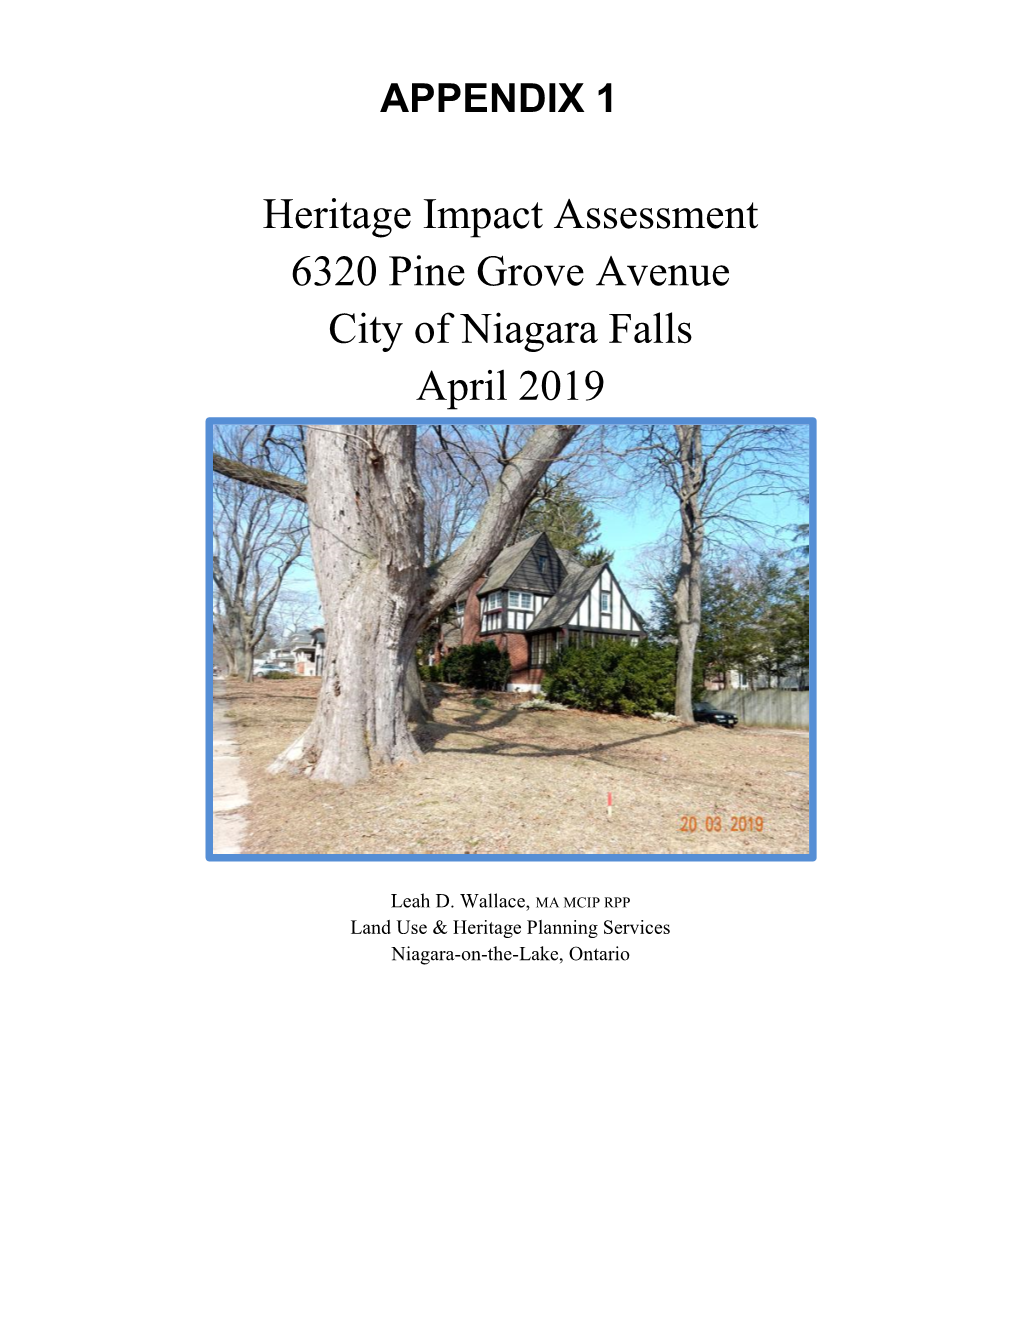 PBD-2020-04, Appendix 1 Heritage Impact Assessment